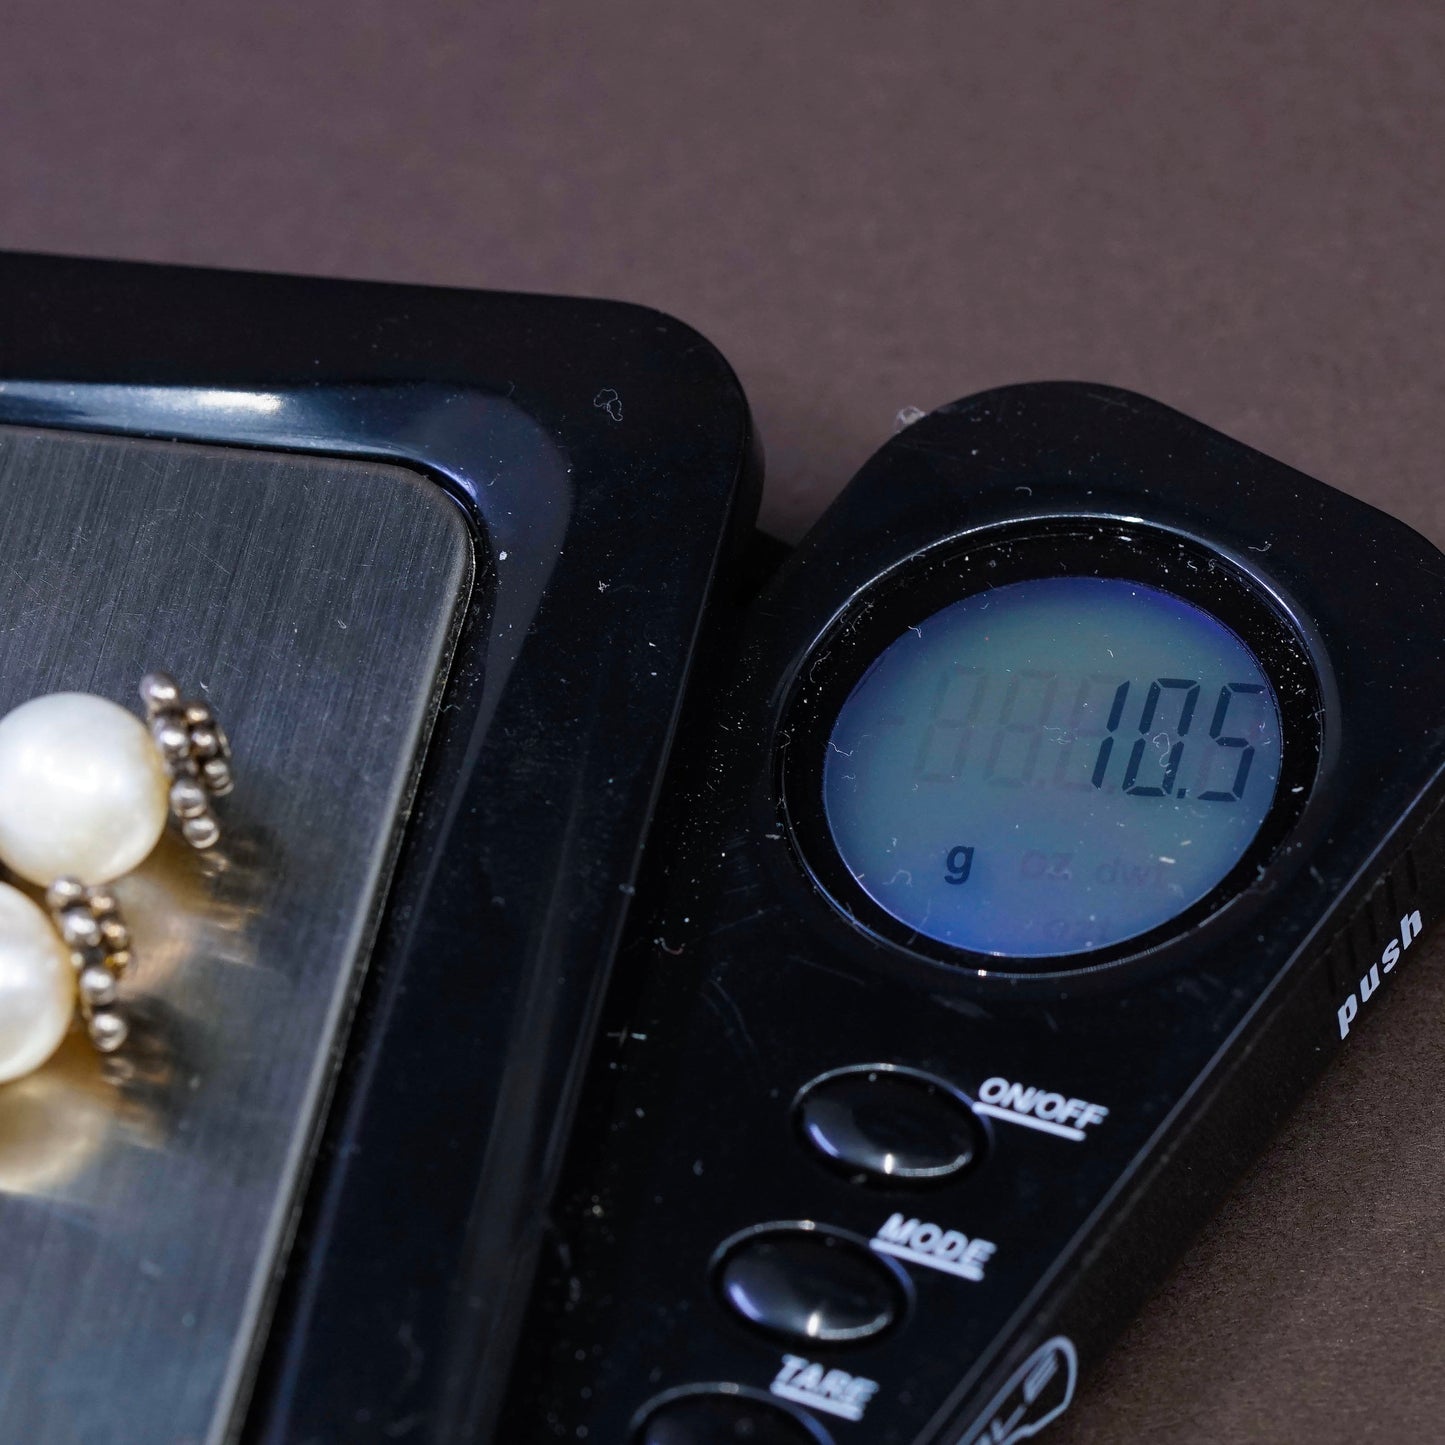 14K yellow gold trim w/ Sterling silver handmade earrings, 925 beads w/ pearl